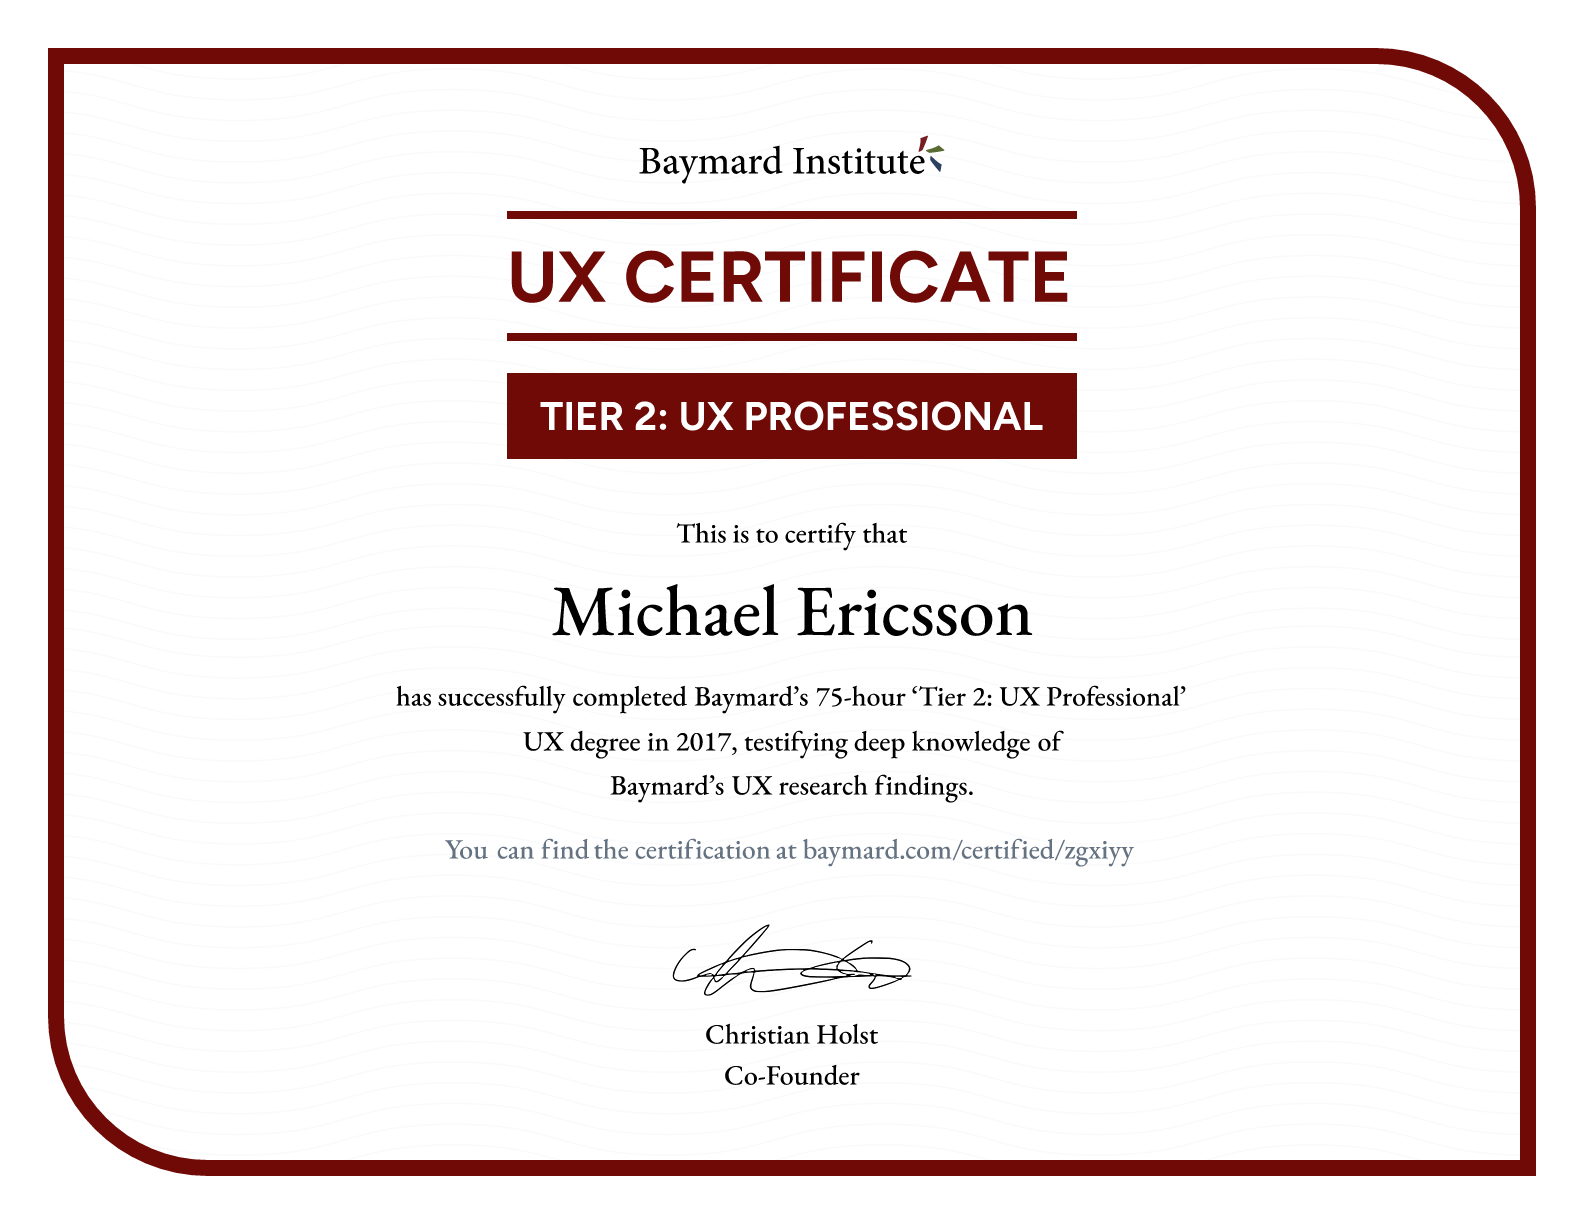 Michael Ericsson’s certificate